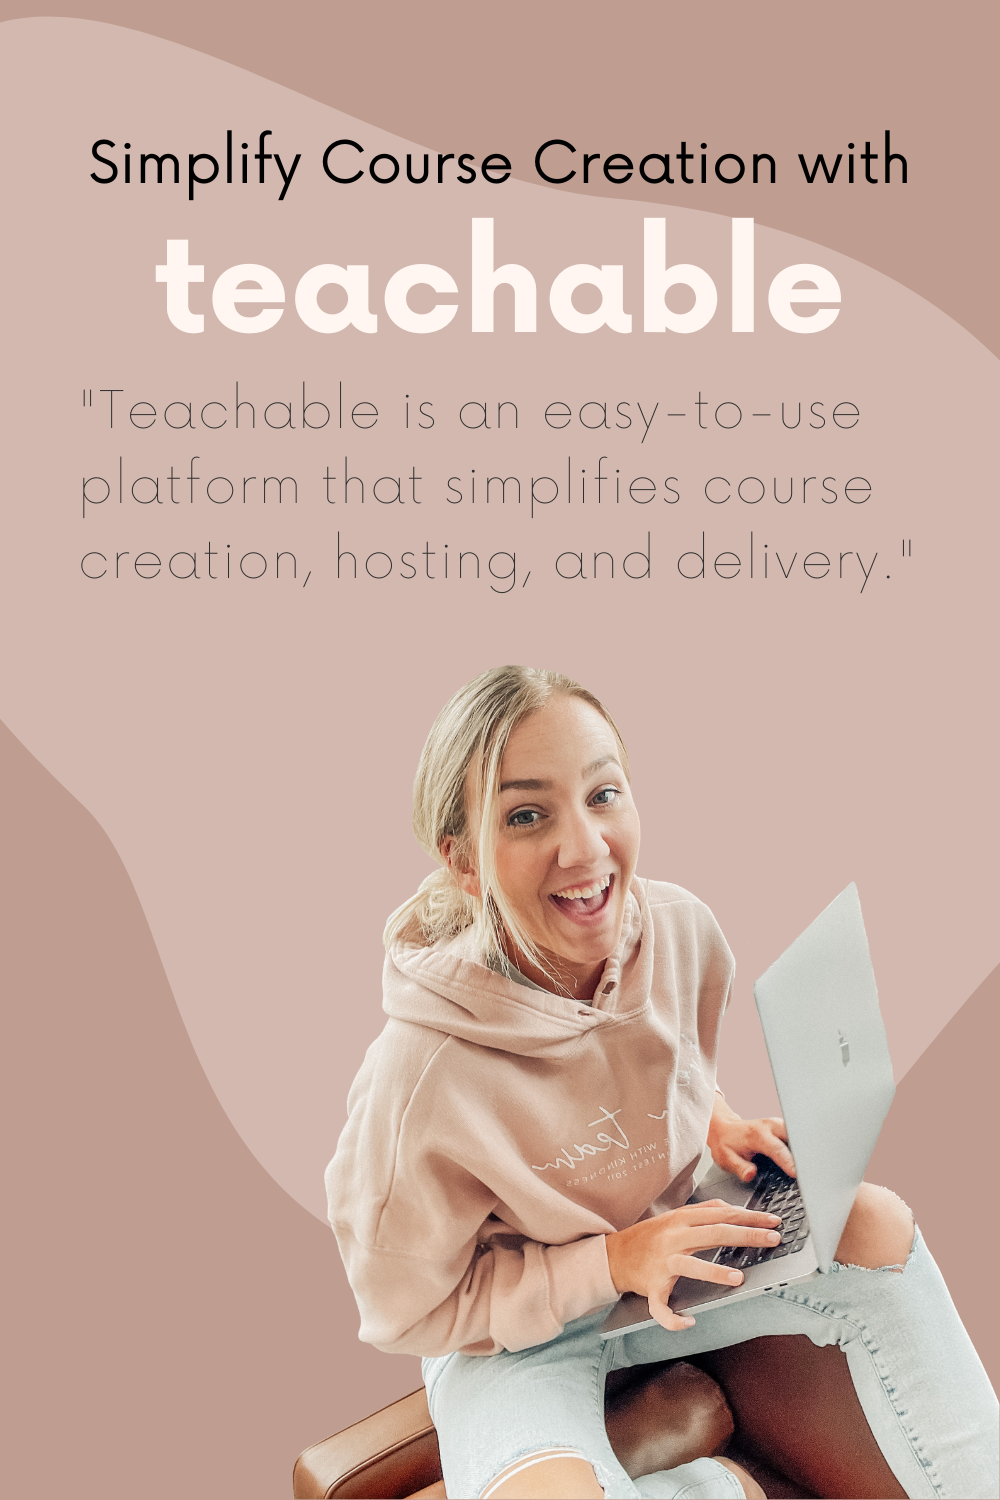 Simplify Course Creation with Teachable